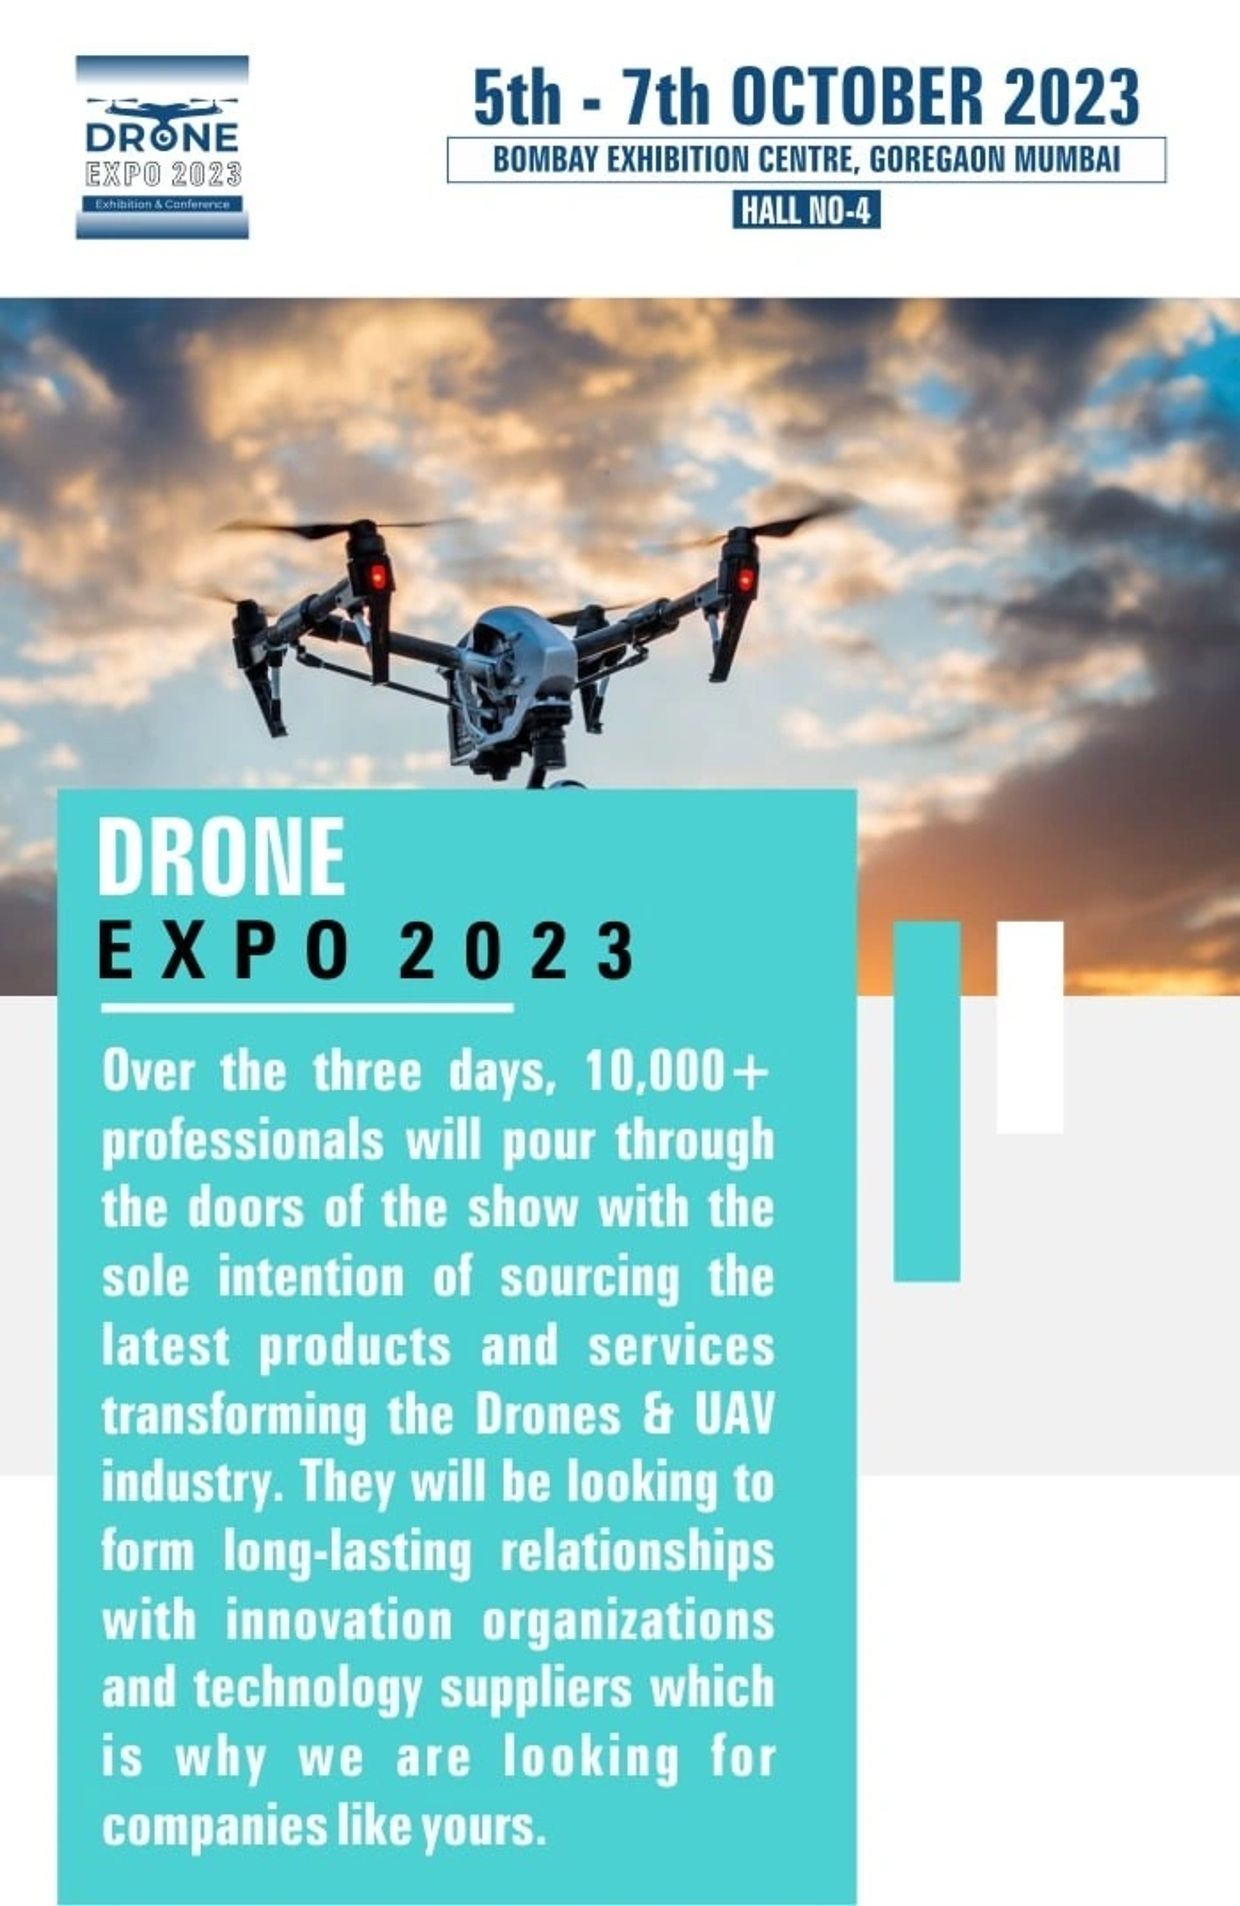 Bots & Drones India - Drone Exhibition, Drone Expo India, Drone Expo